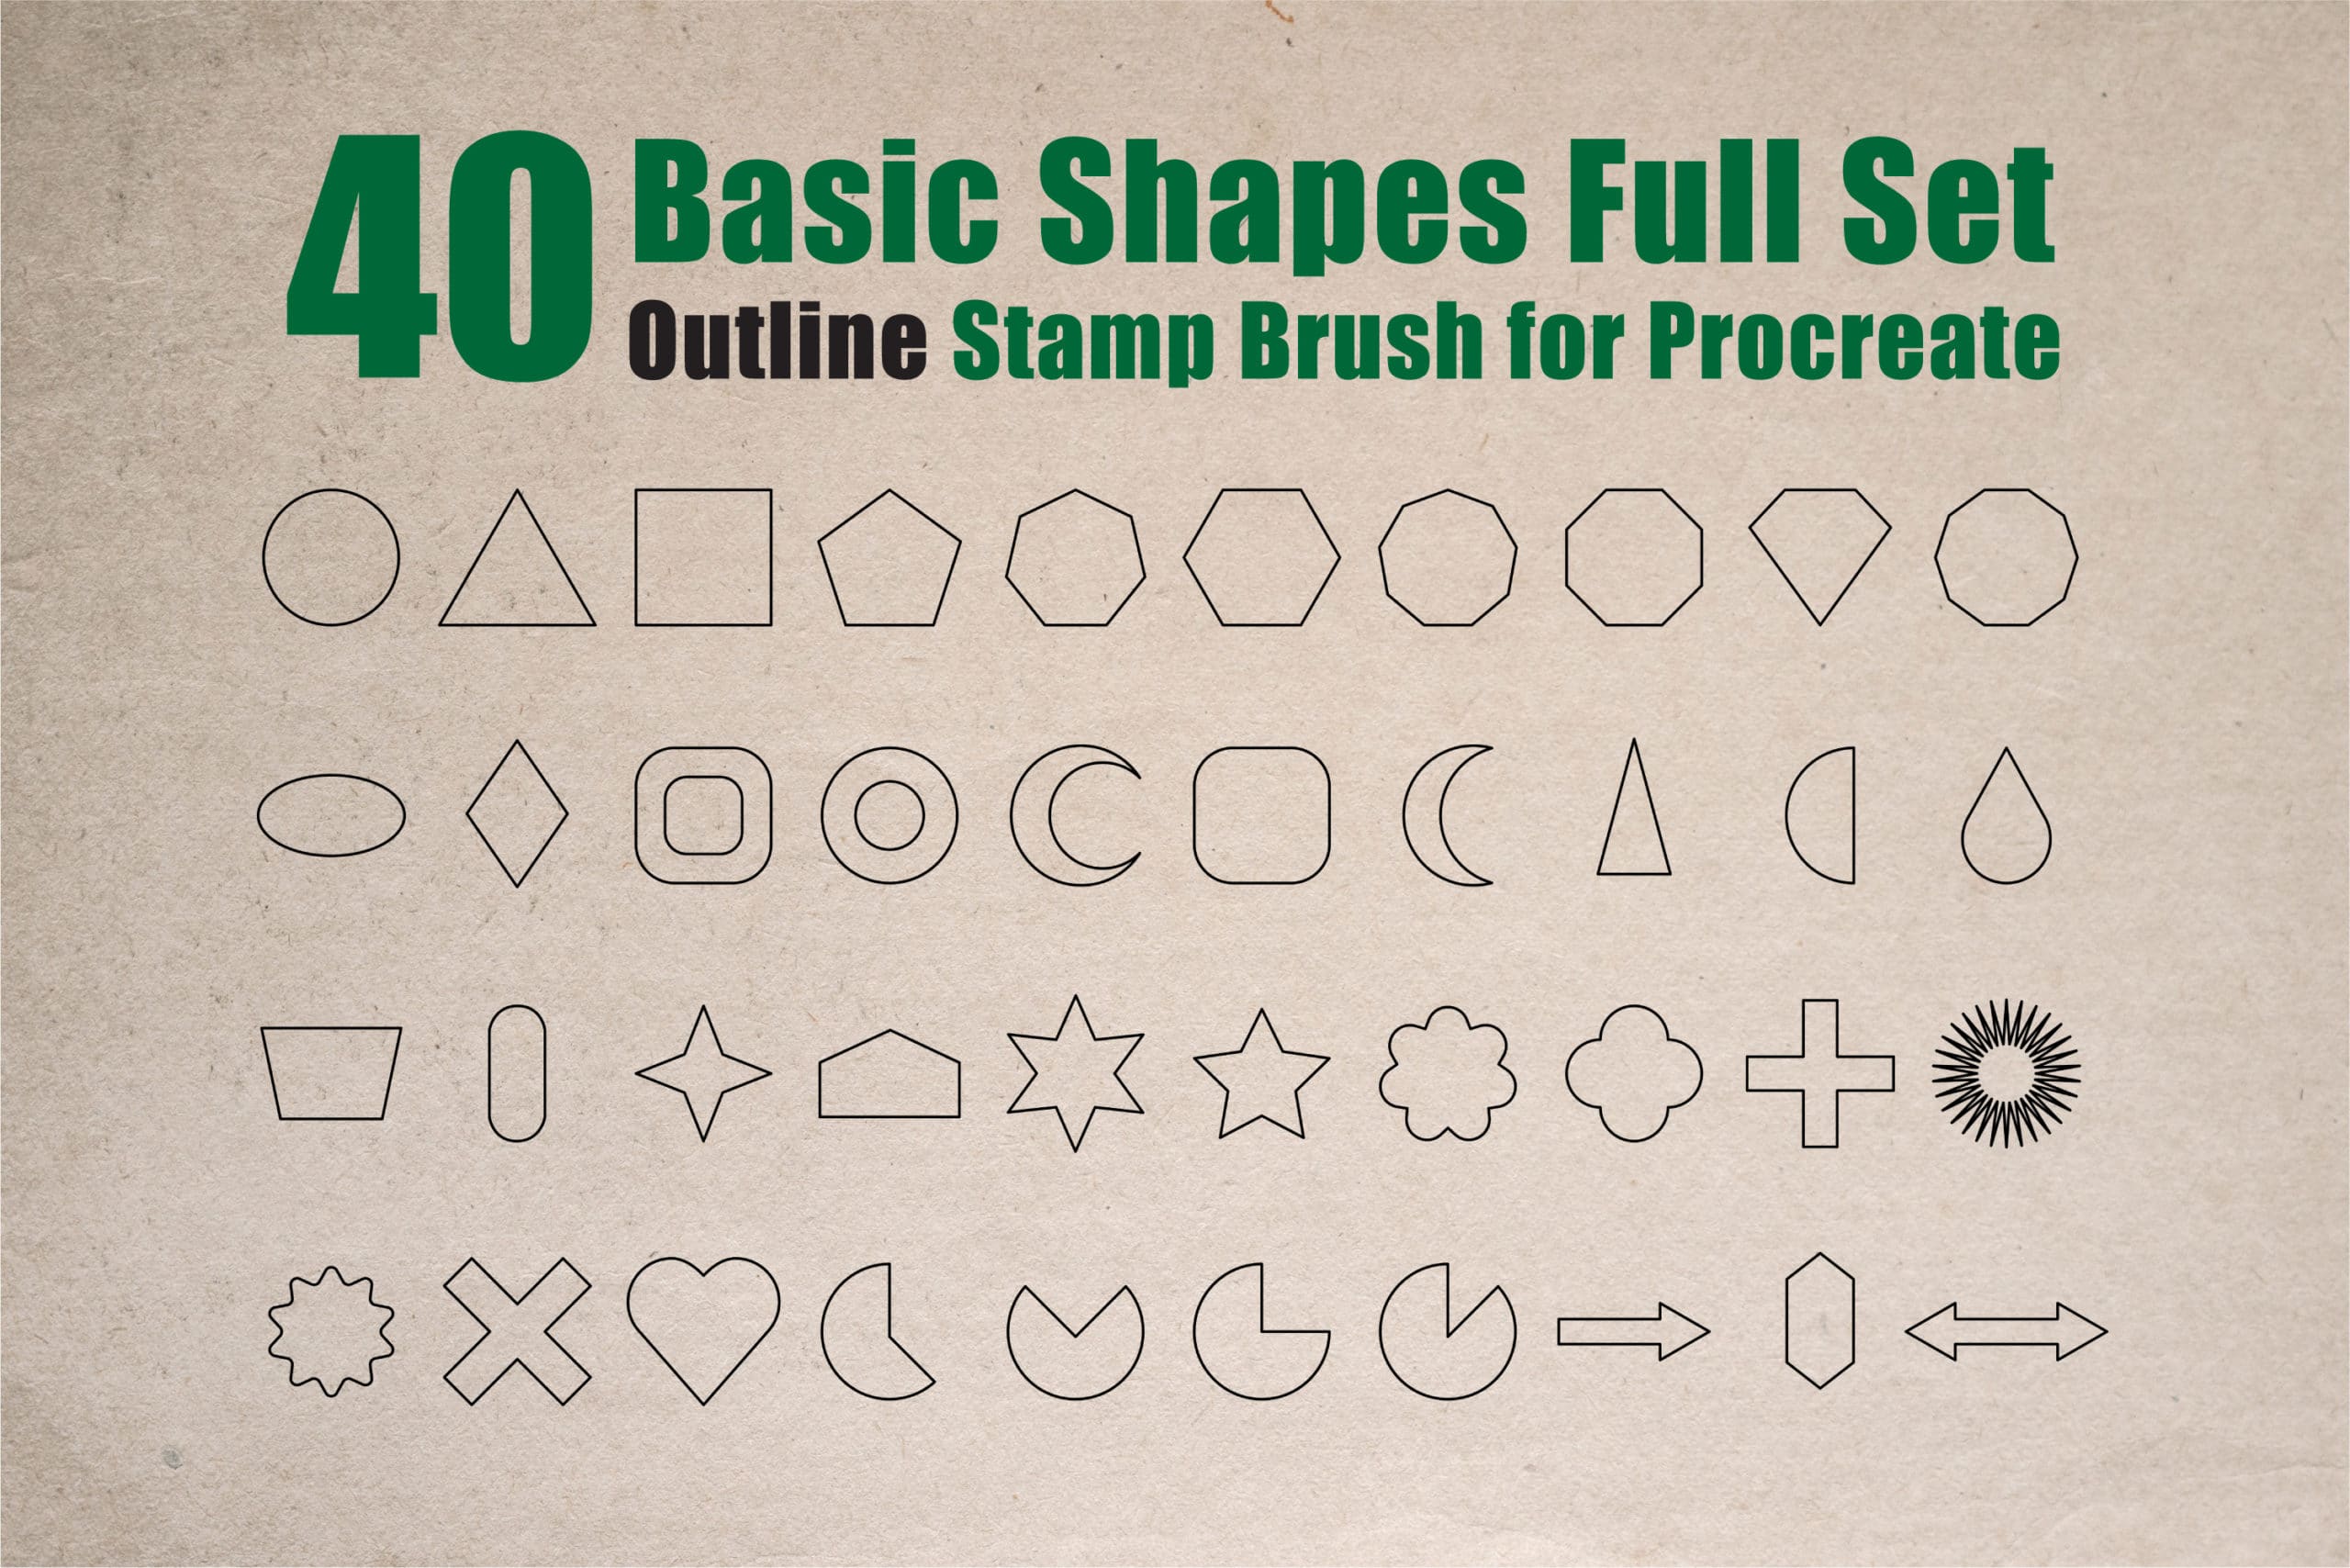 Basic Shapes Stamps Brushes for Procreate